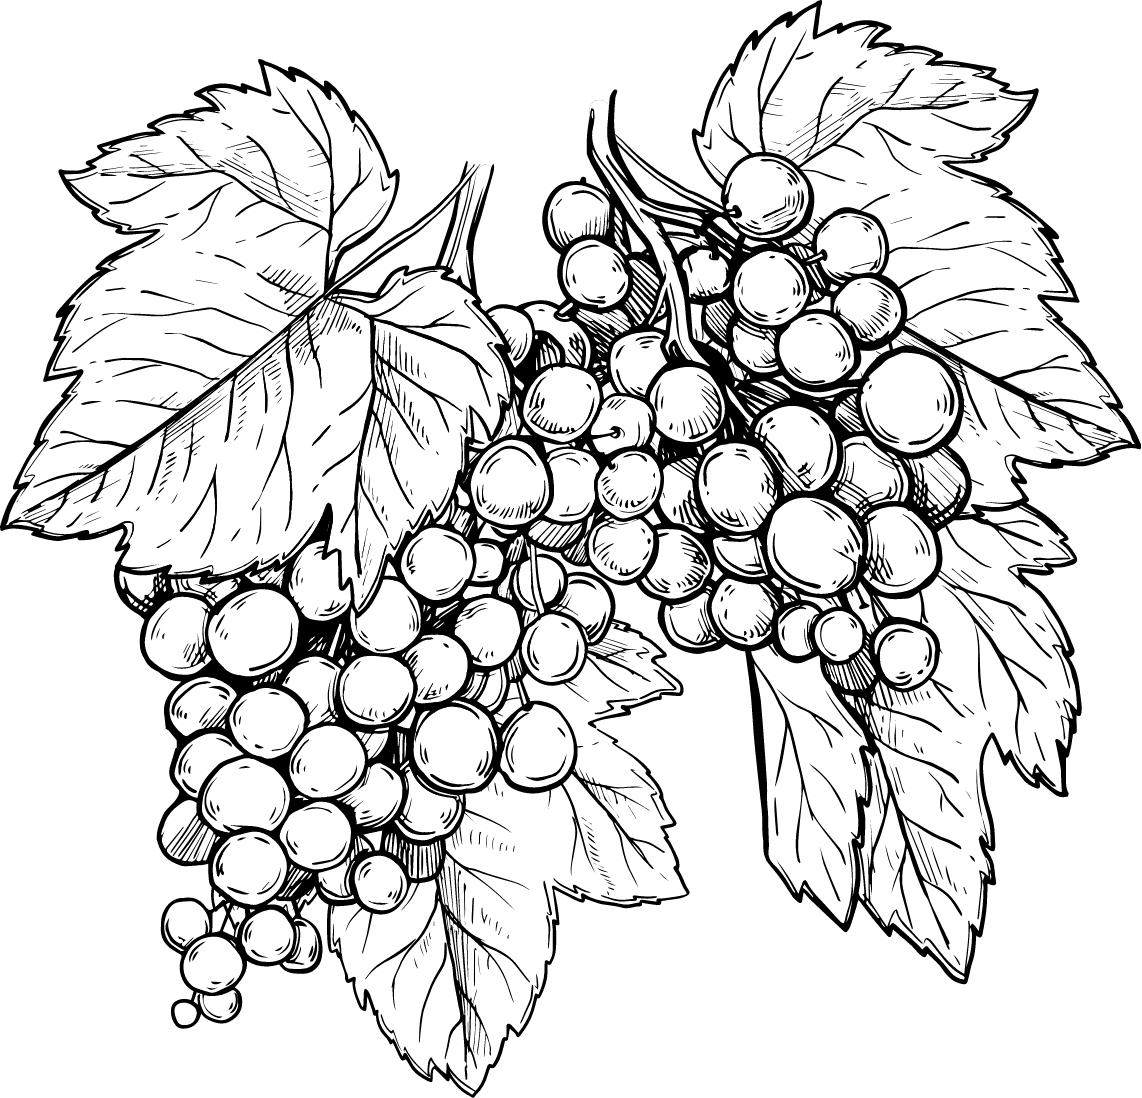 grape image